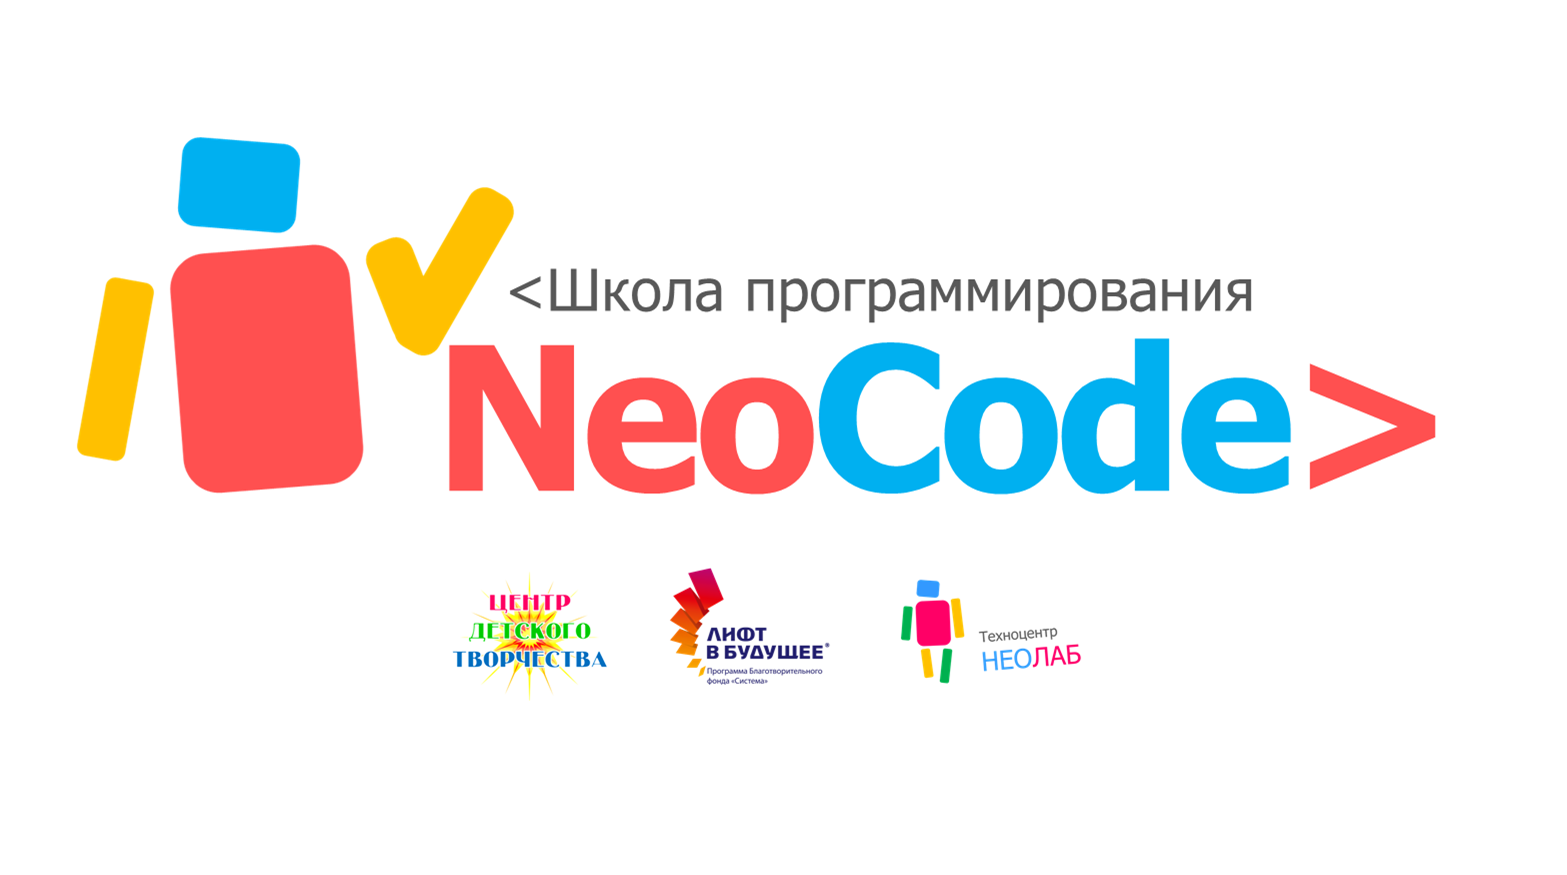 Школа программирования «NeoCode»